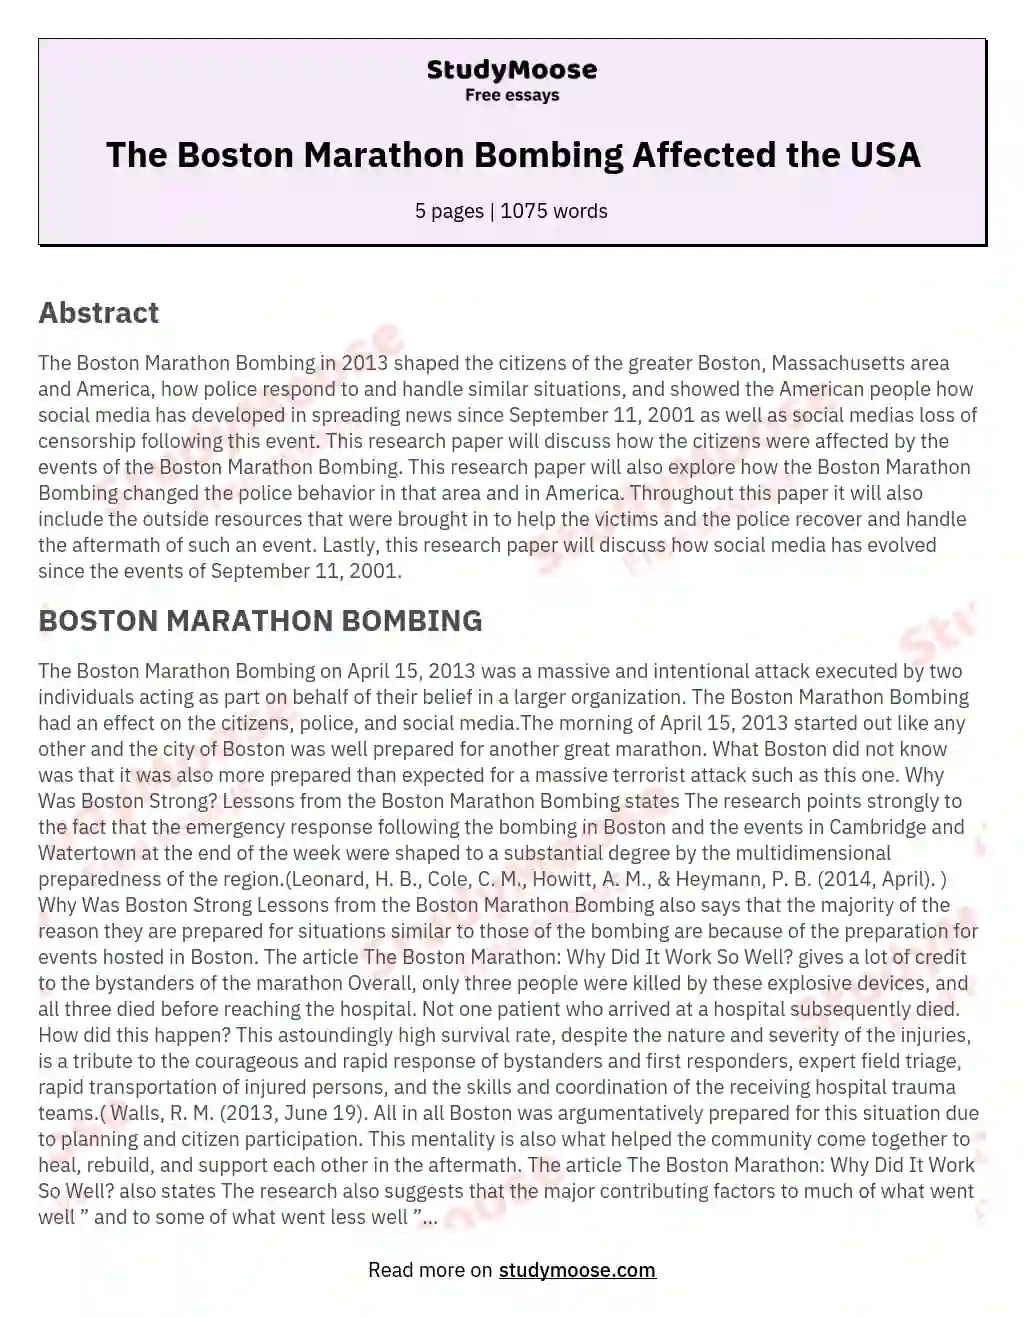 The Boston Marathon Bombing Affected the USA essay